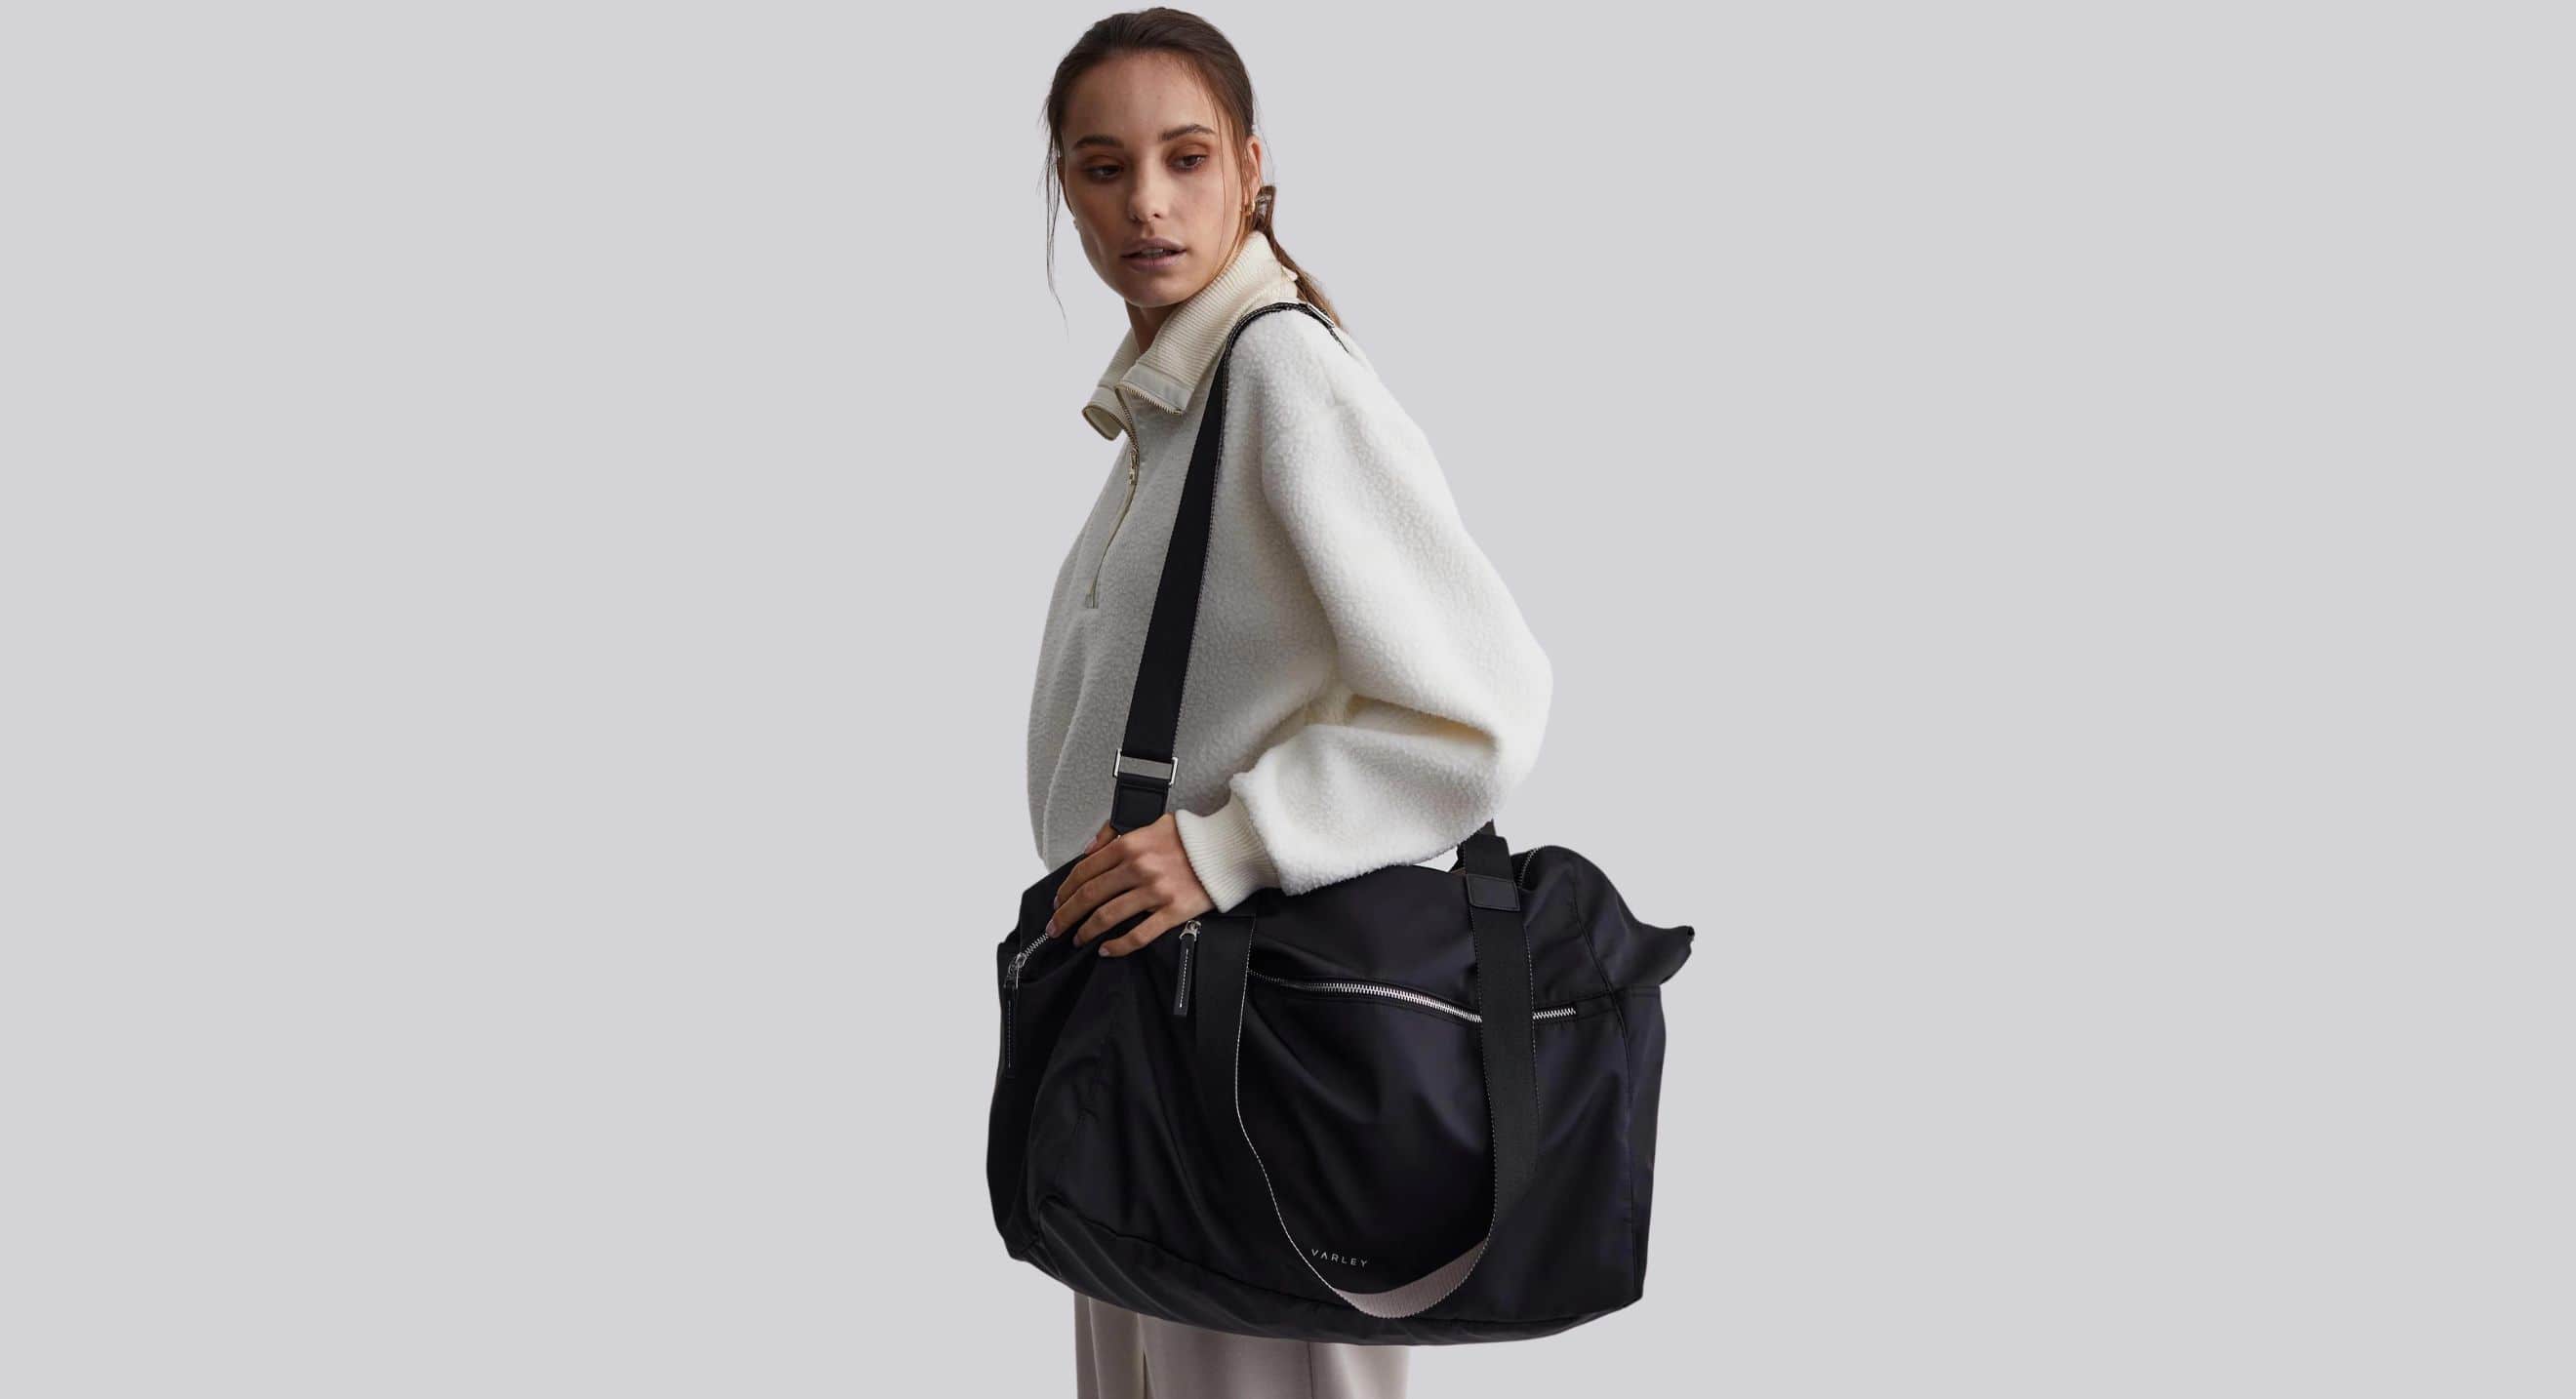 Picnic Mat Bag,Yoga Tote Bag Large Yoga Mat Shoulder Bag Yoga Mat Carrier  Reliable and Durable 